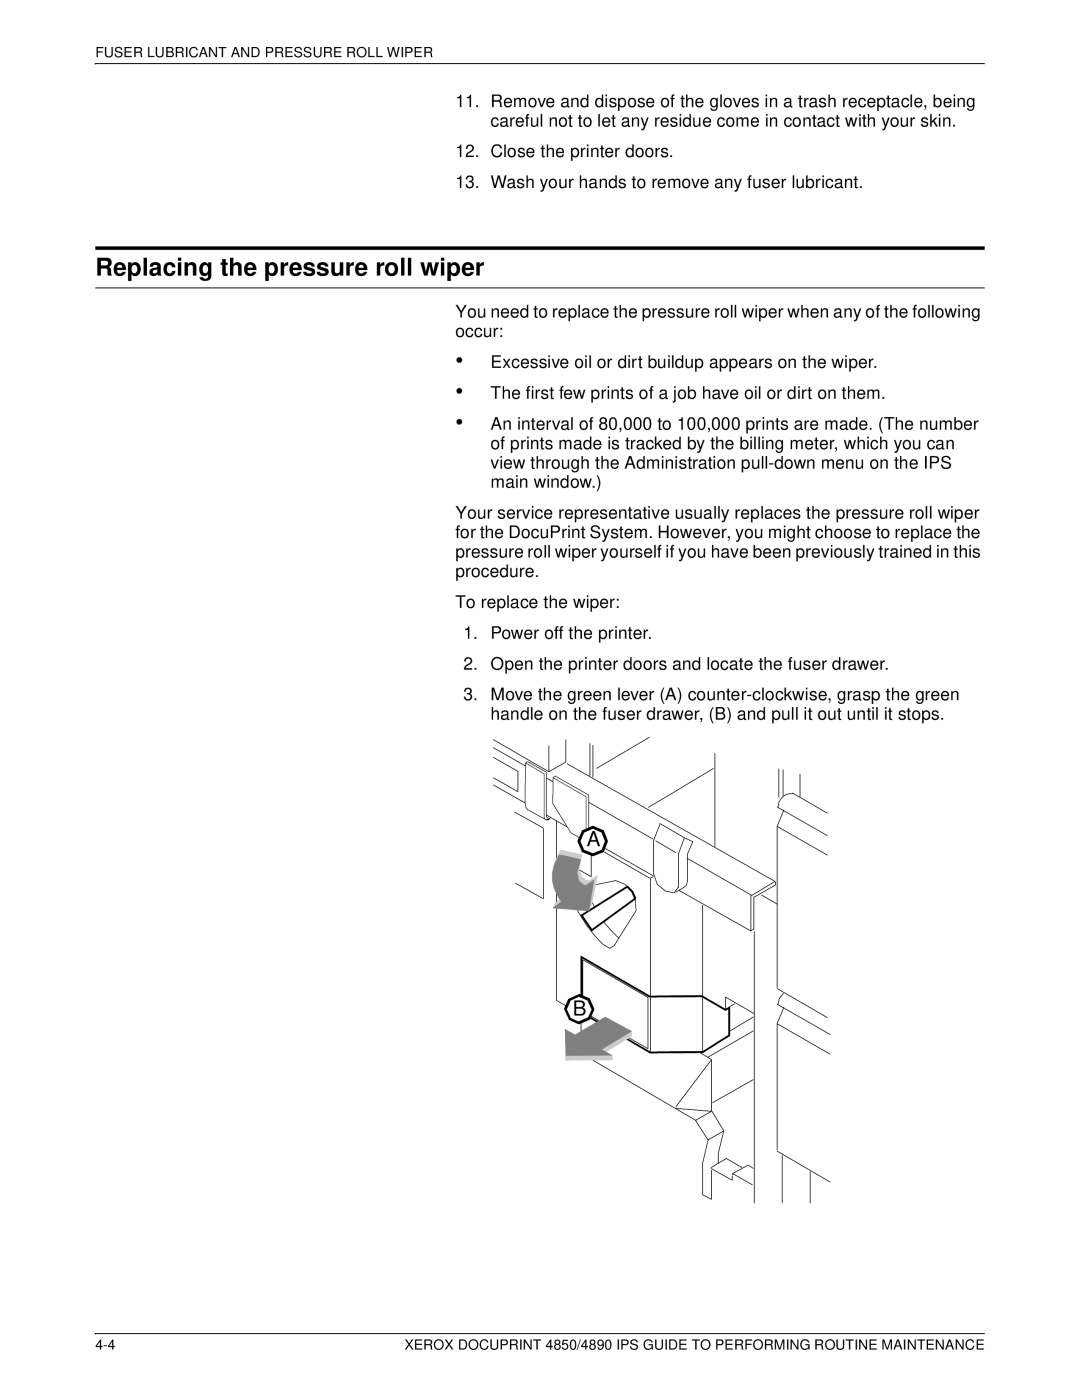 Xerox 4890 IPS manual Replacing the pressure roll wiper 